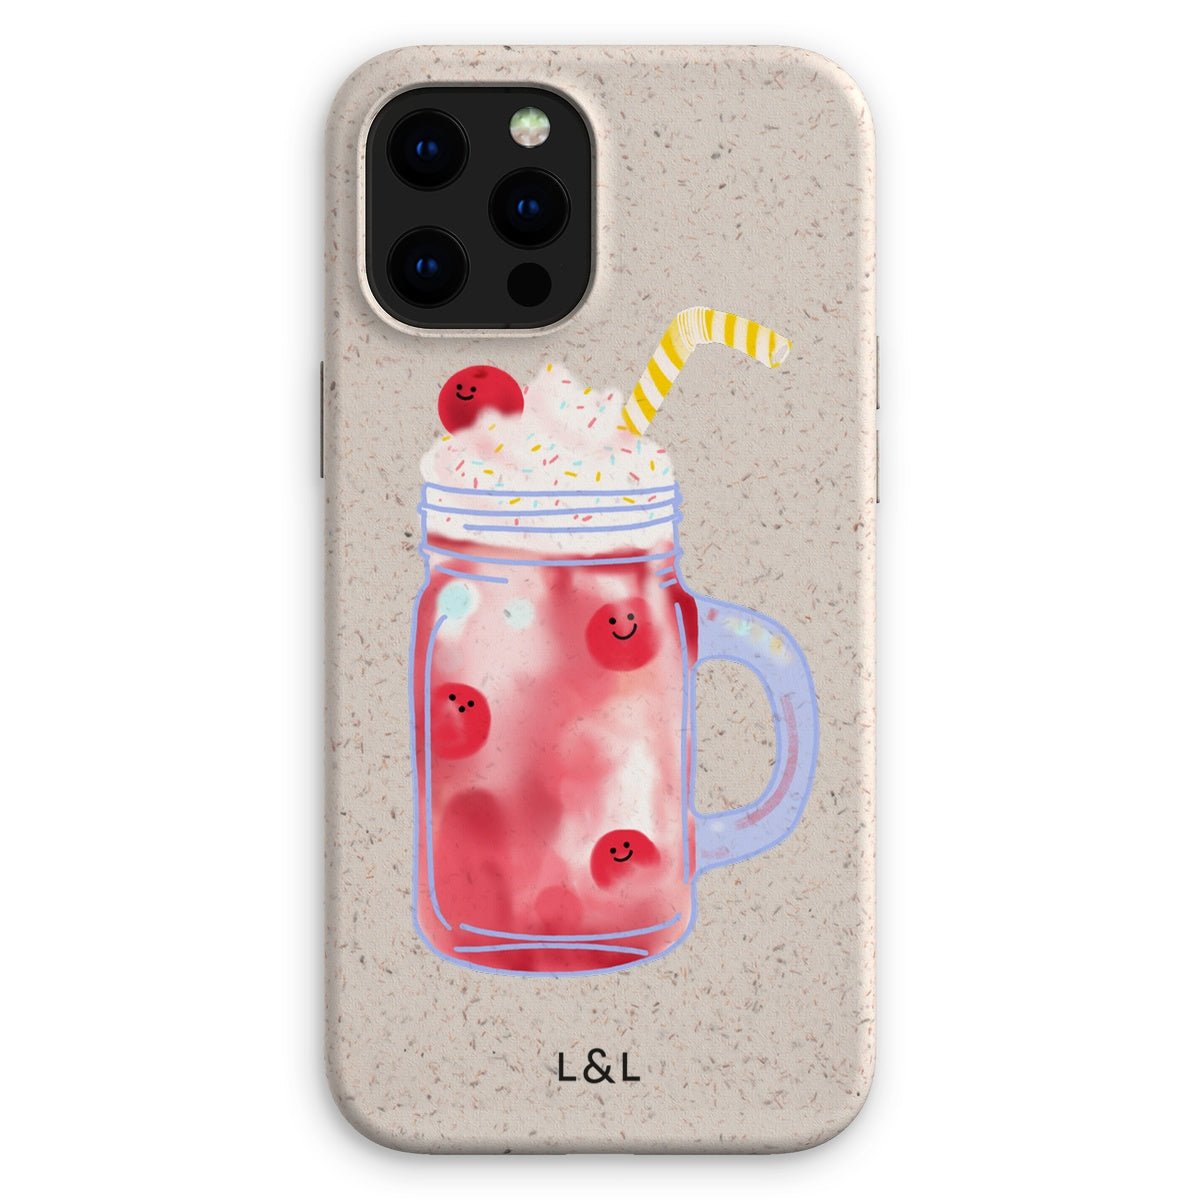 Milkshake Eco Phone Case - Loam & Lore